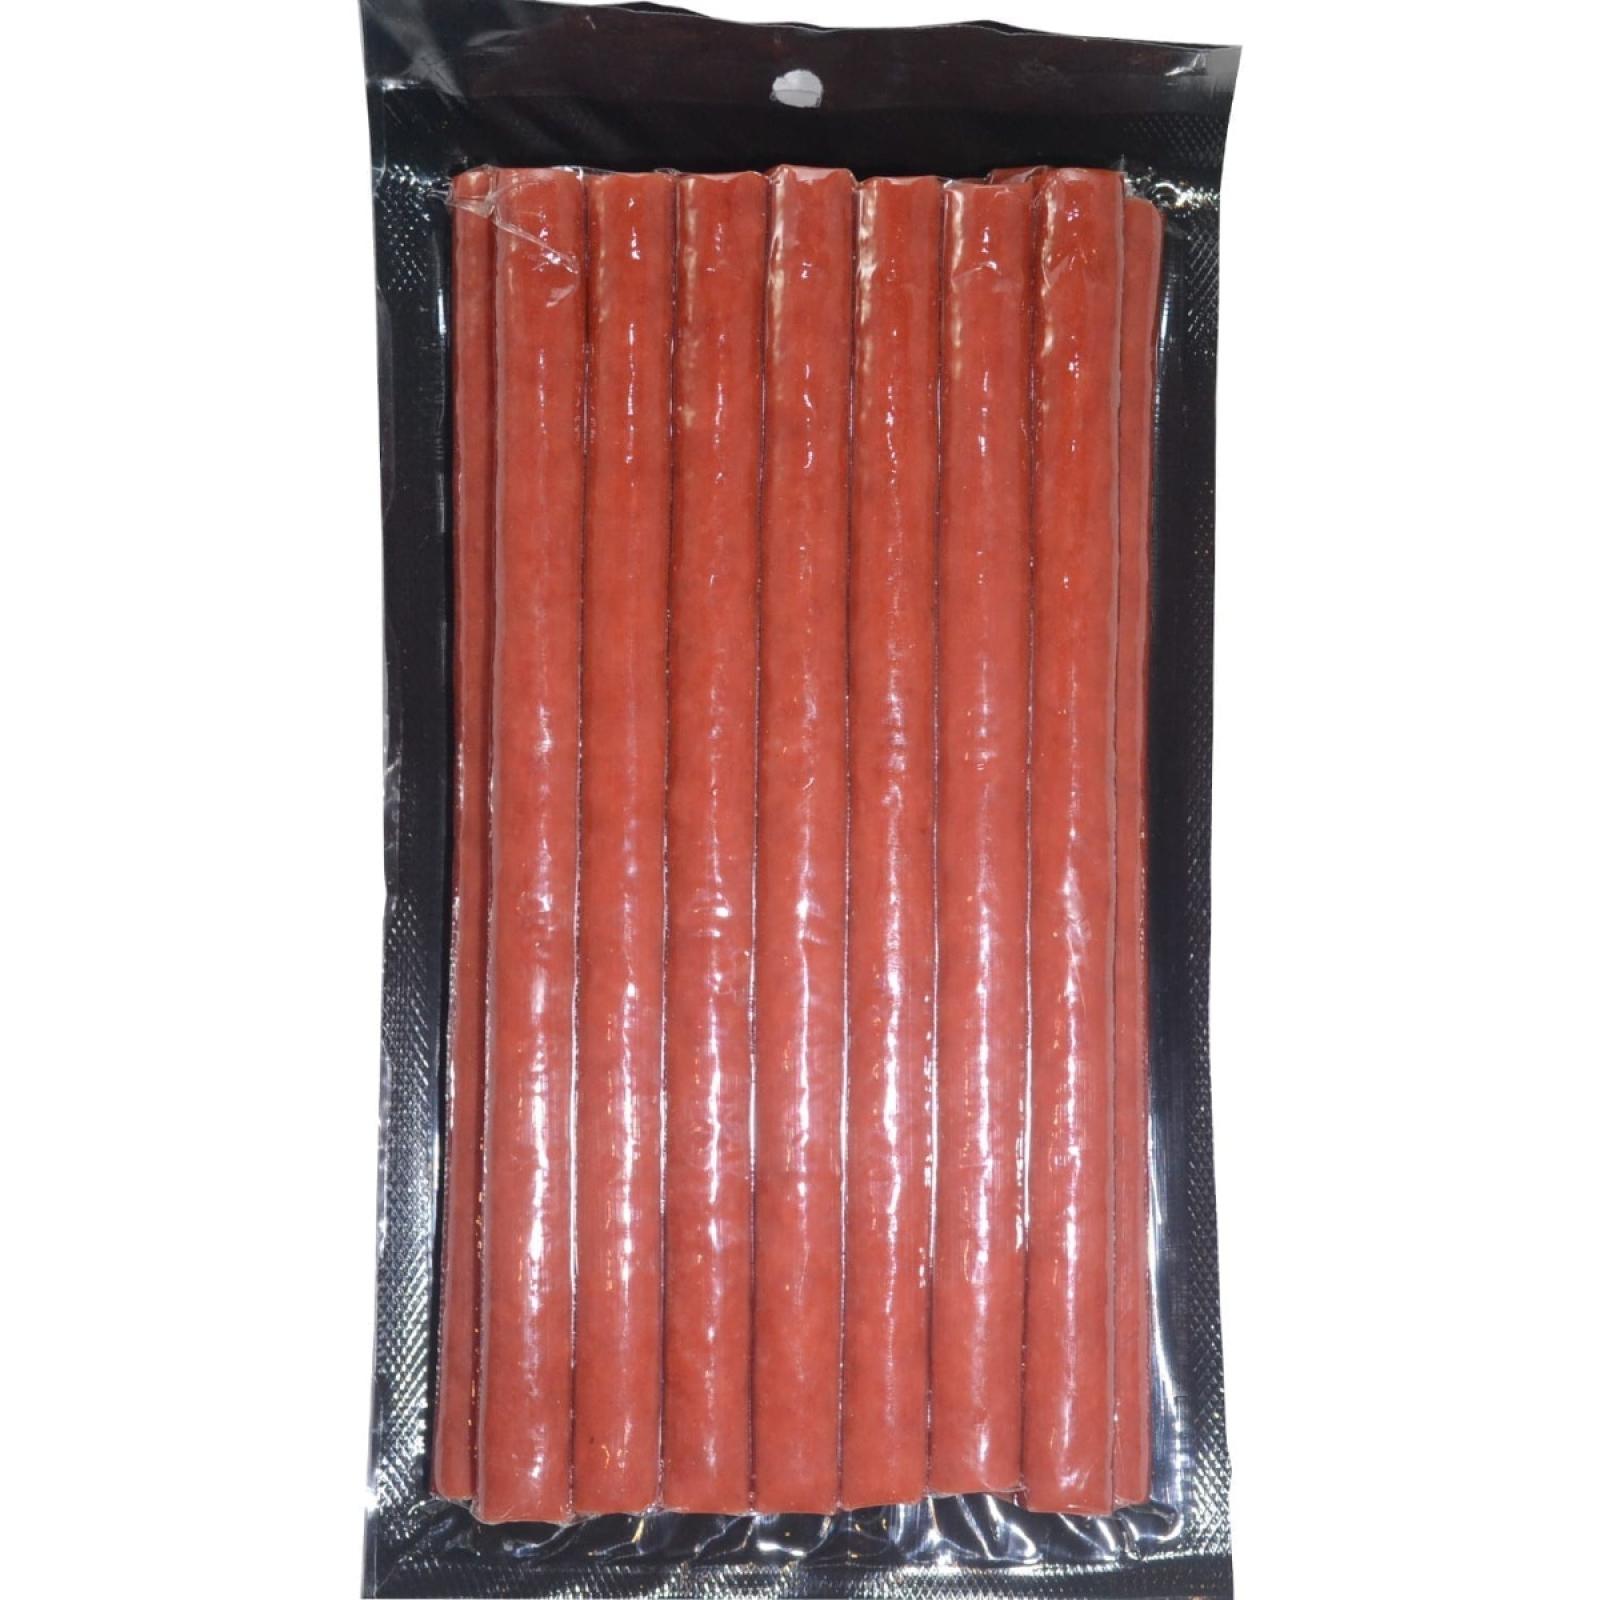 Iowa Smokehouse 16 oz Meat Sticks Original